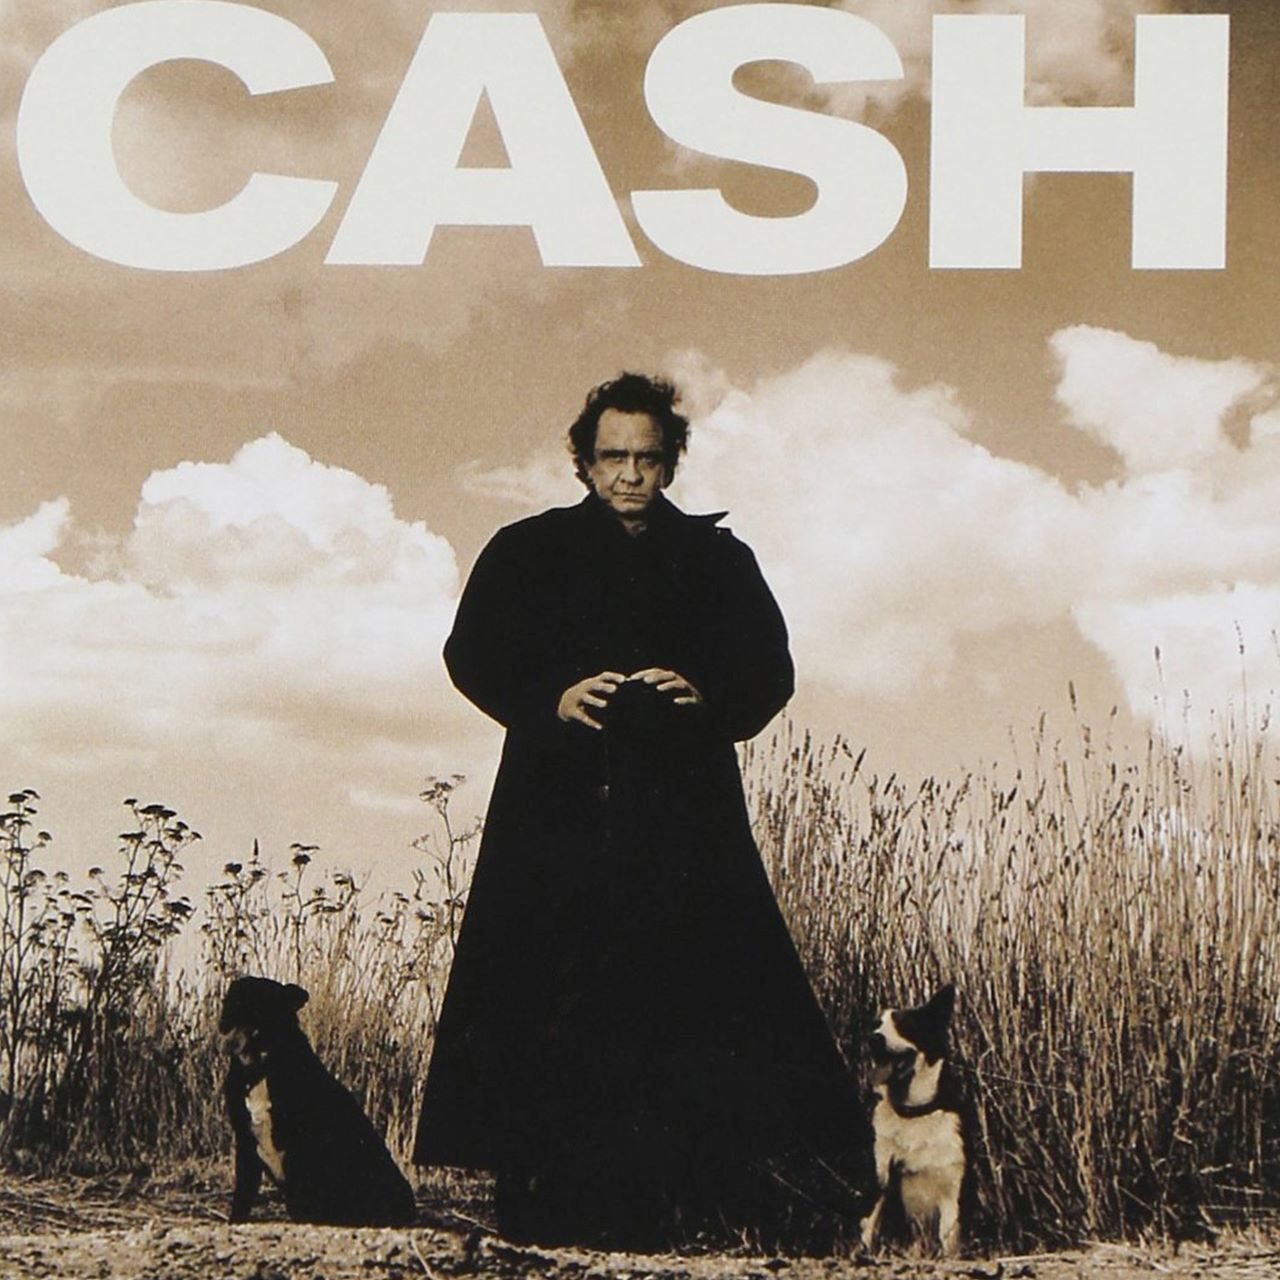 Johnny Cash – American Recordings cover album